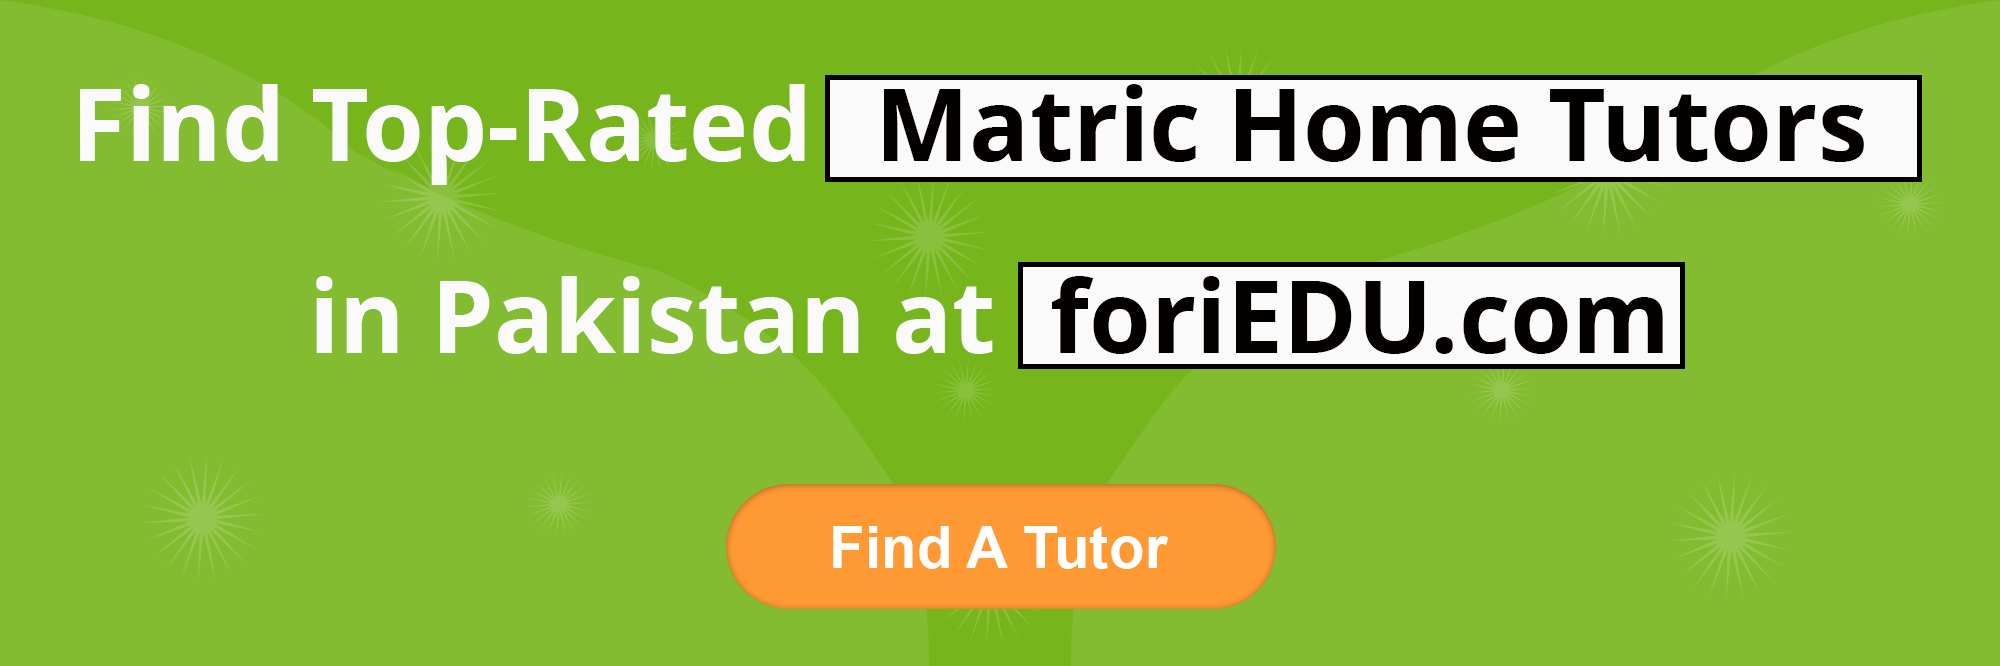 Matric Home Tutors in Pakistan 4